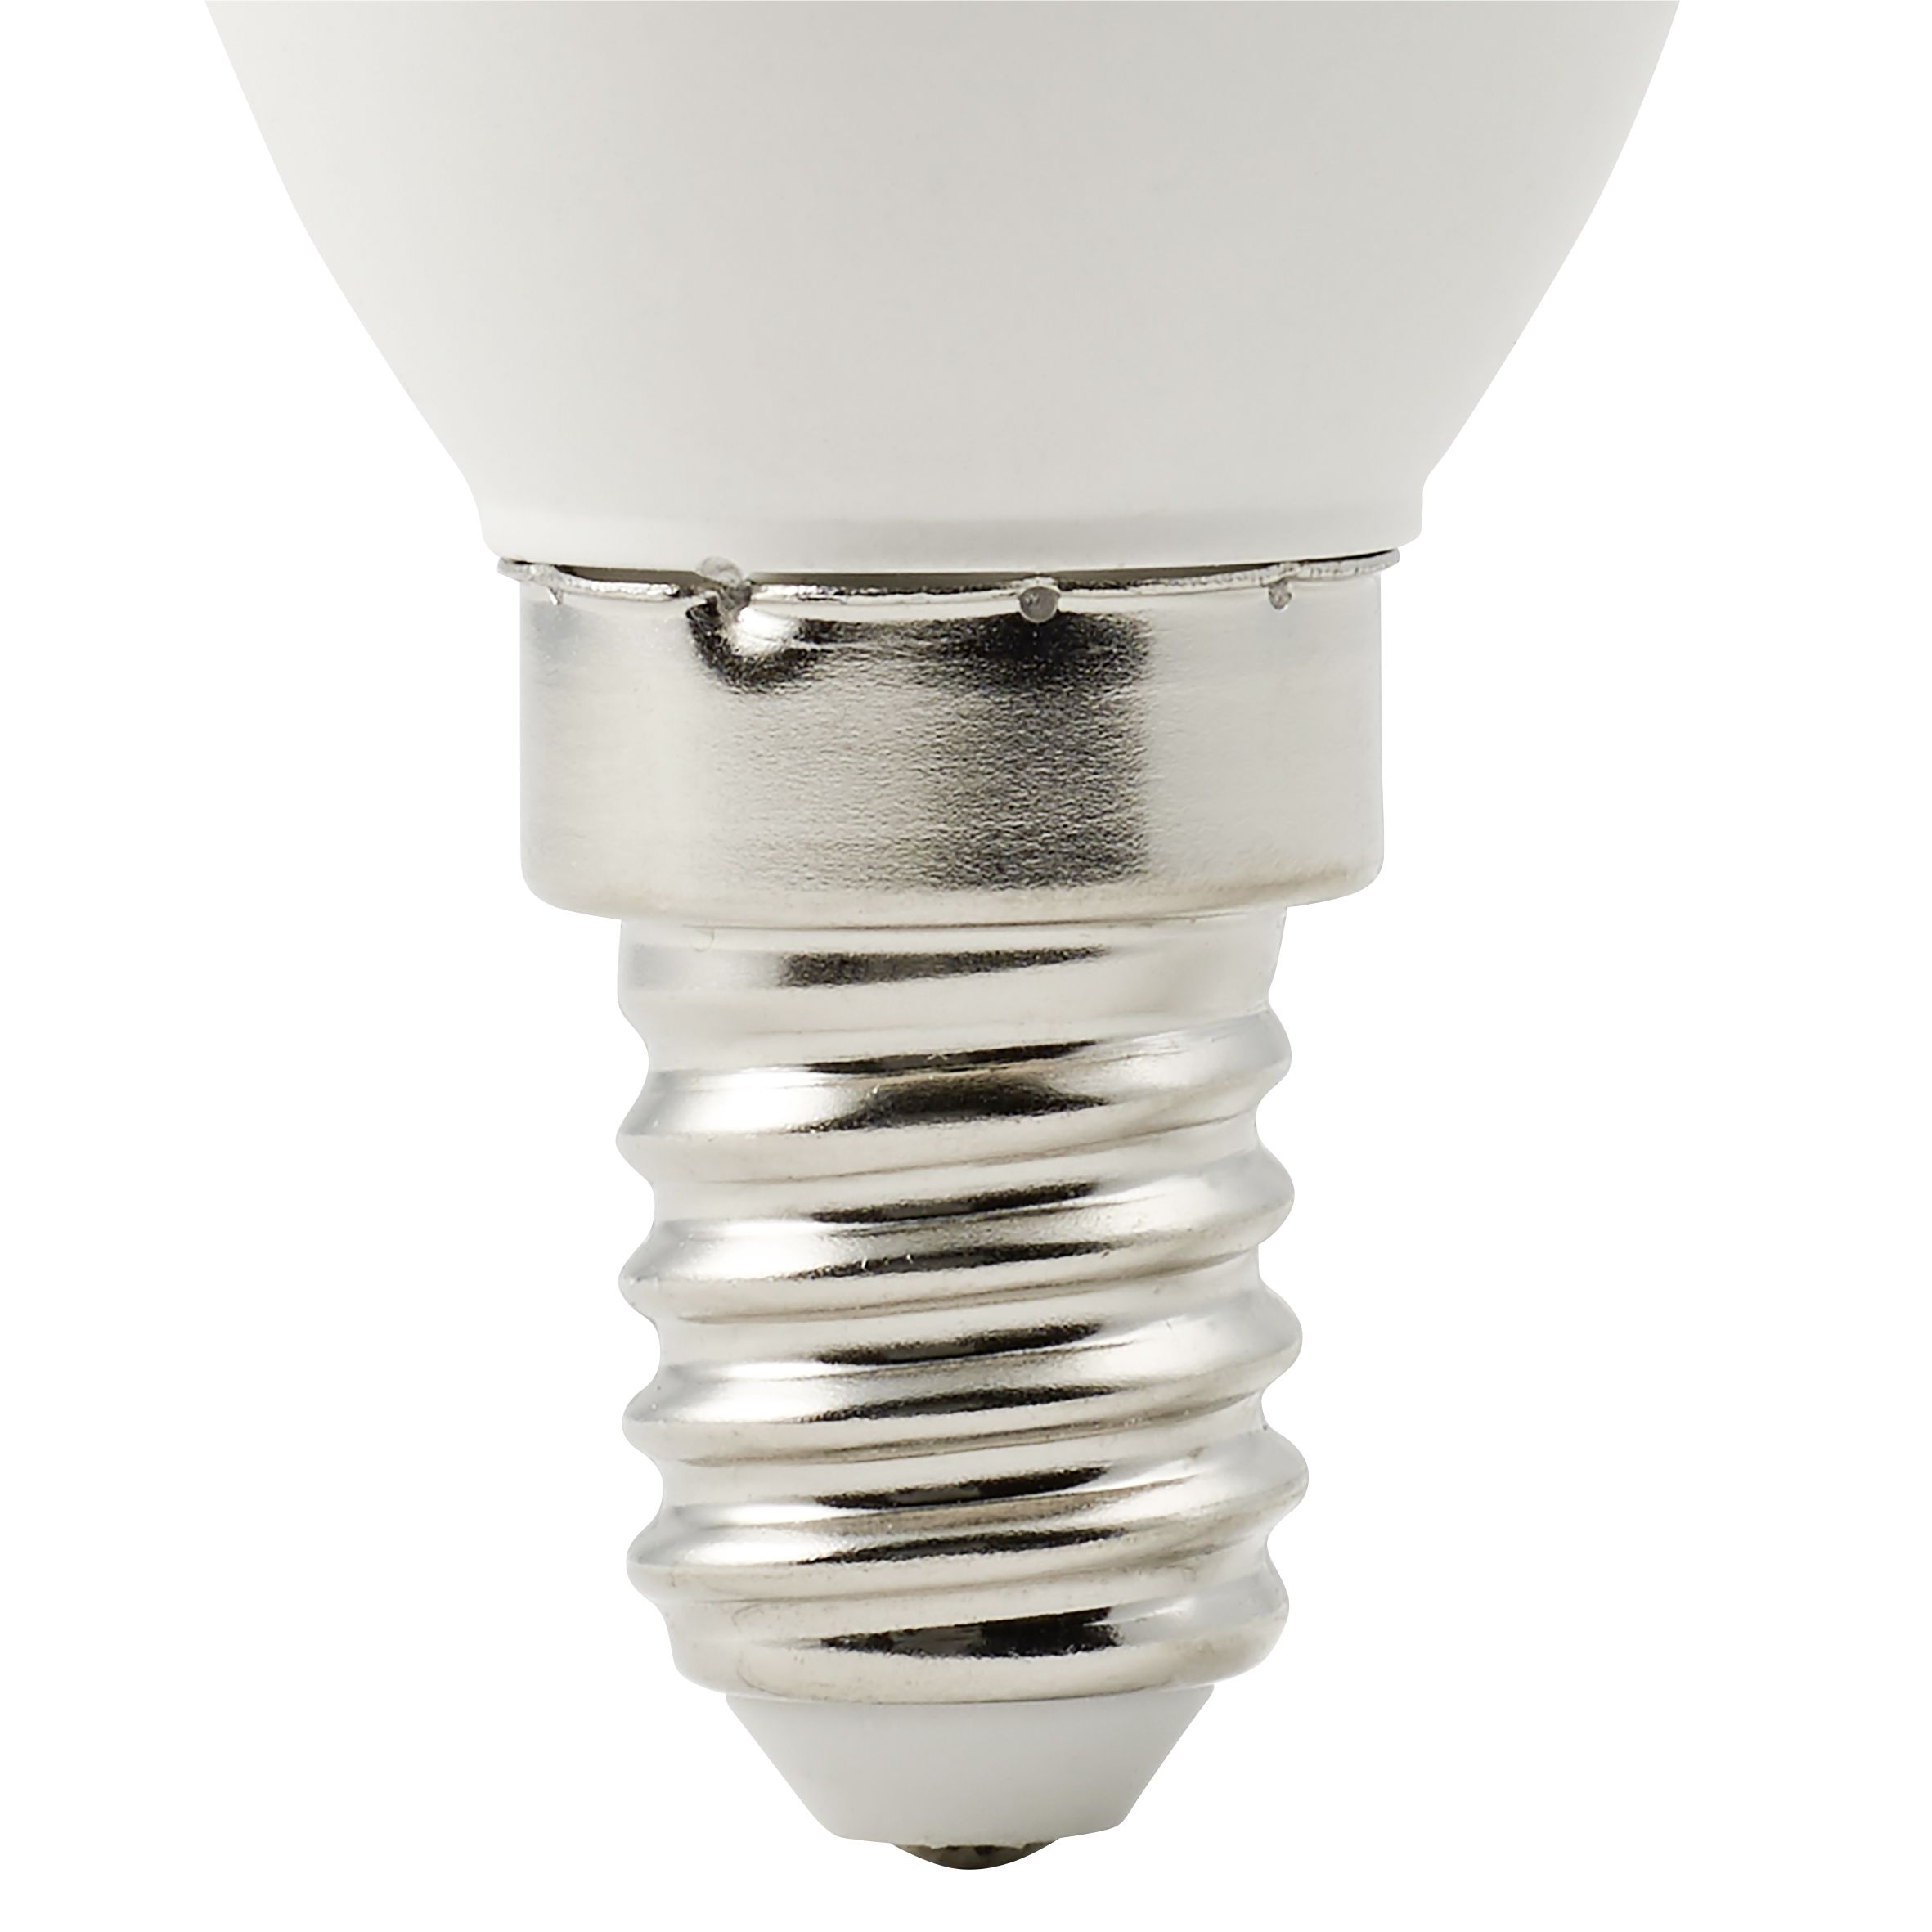 Diall E14 4.2W 470lm Frosted Mini globe Neutral white LED Light bulb